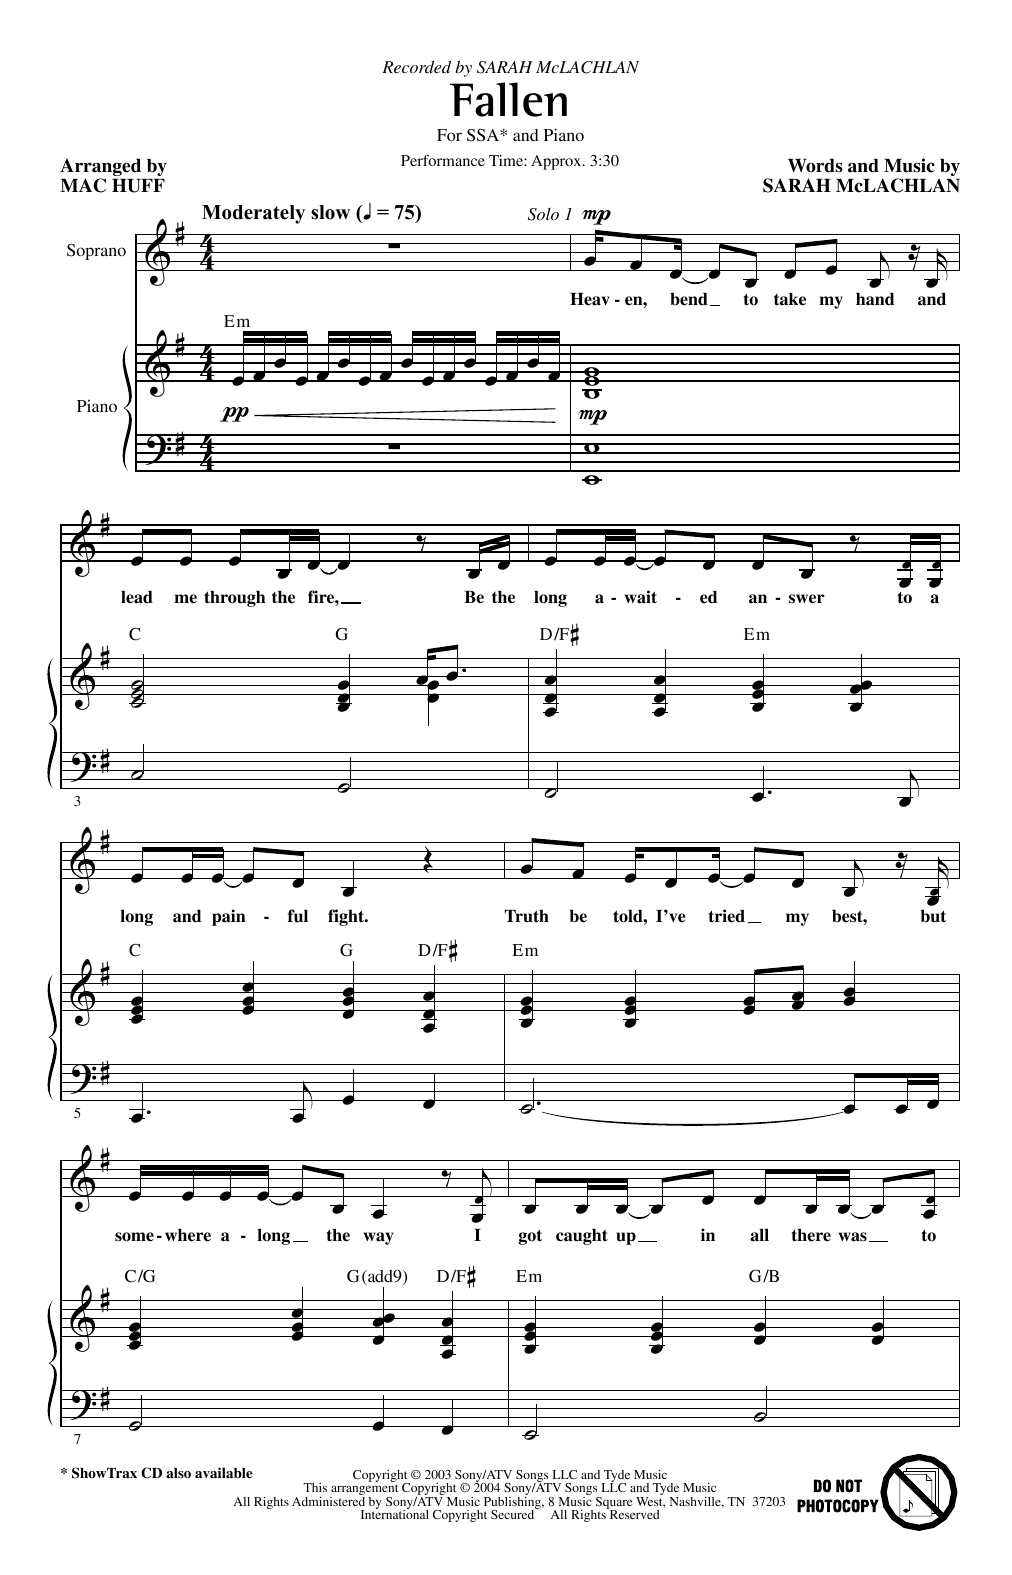 Sarah McLachlan Fallen (arr. Mac Huff) Sheet Music Notes & Chords for SSA Choir - Download or Print PDF